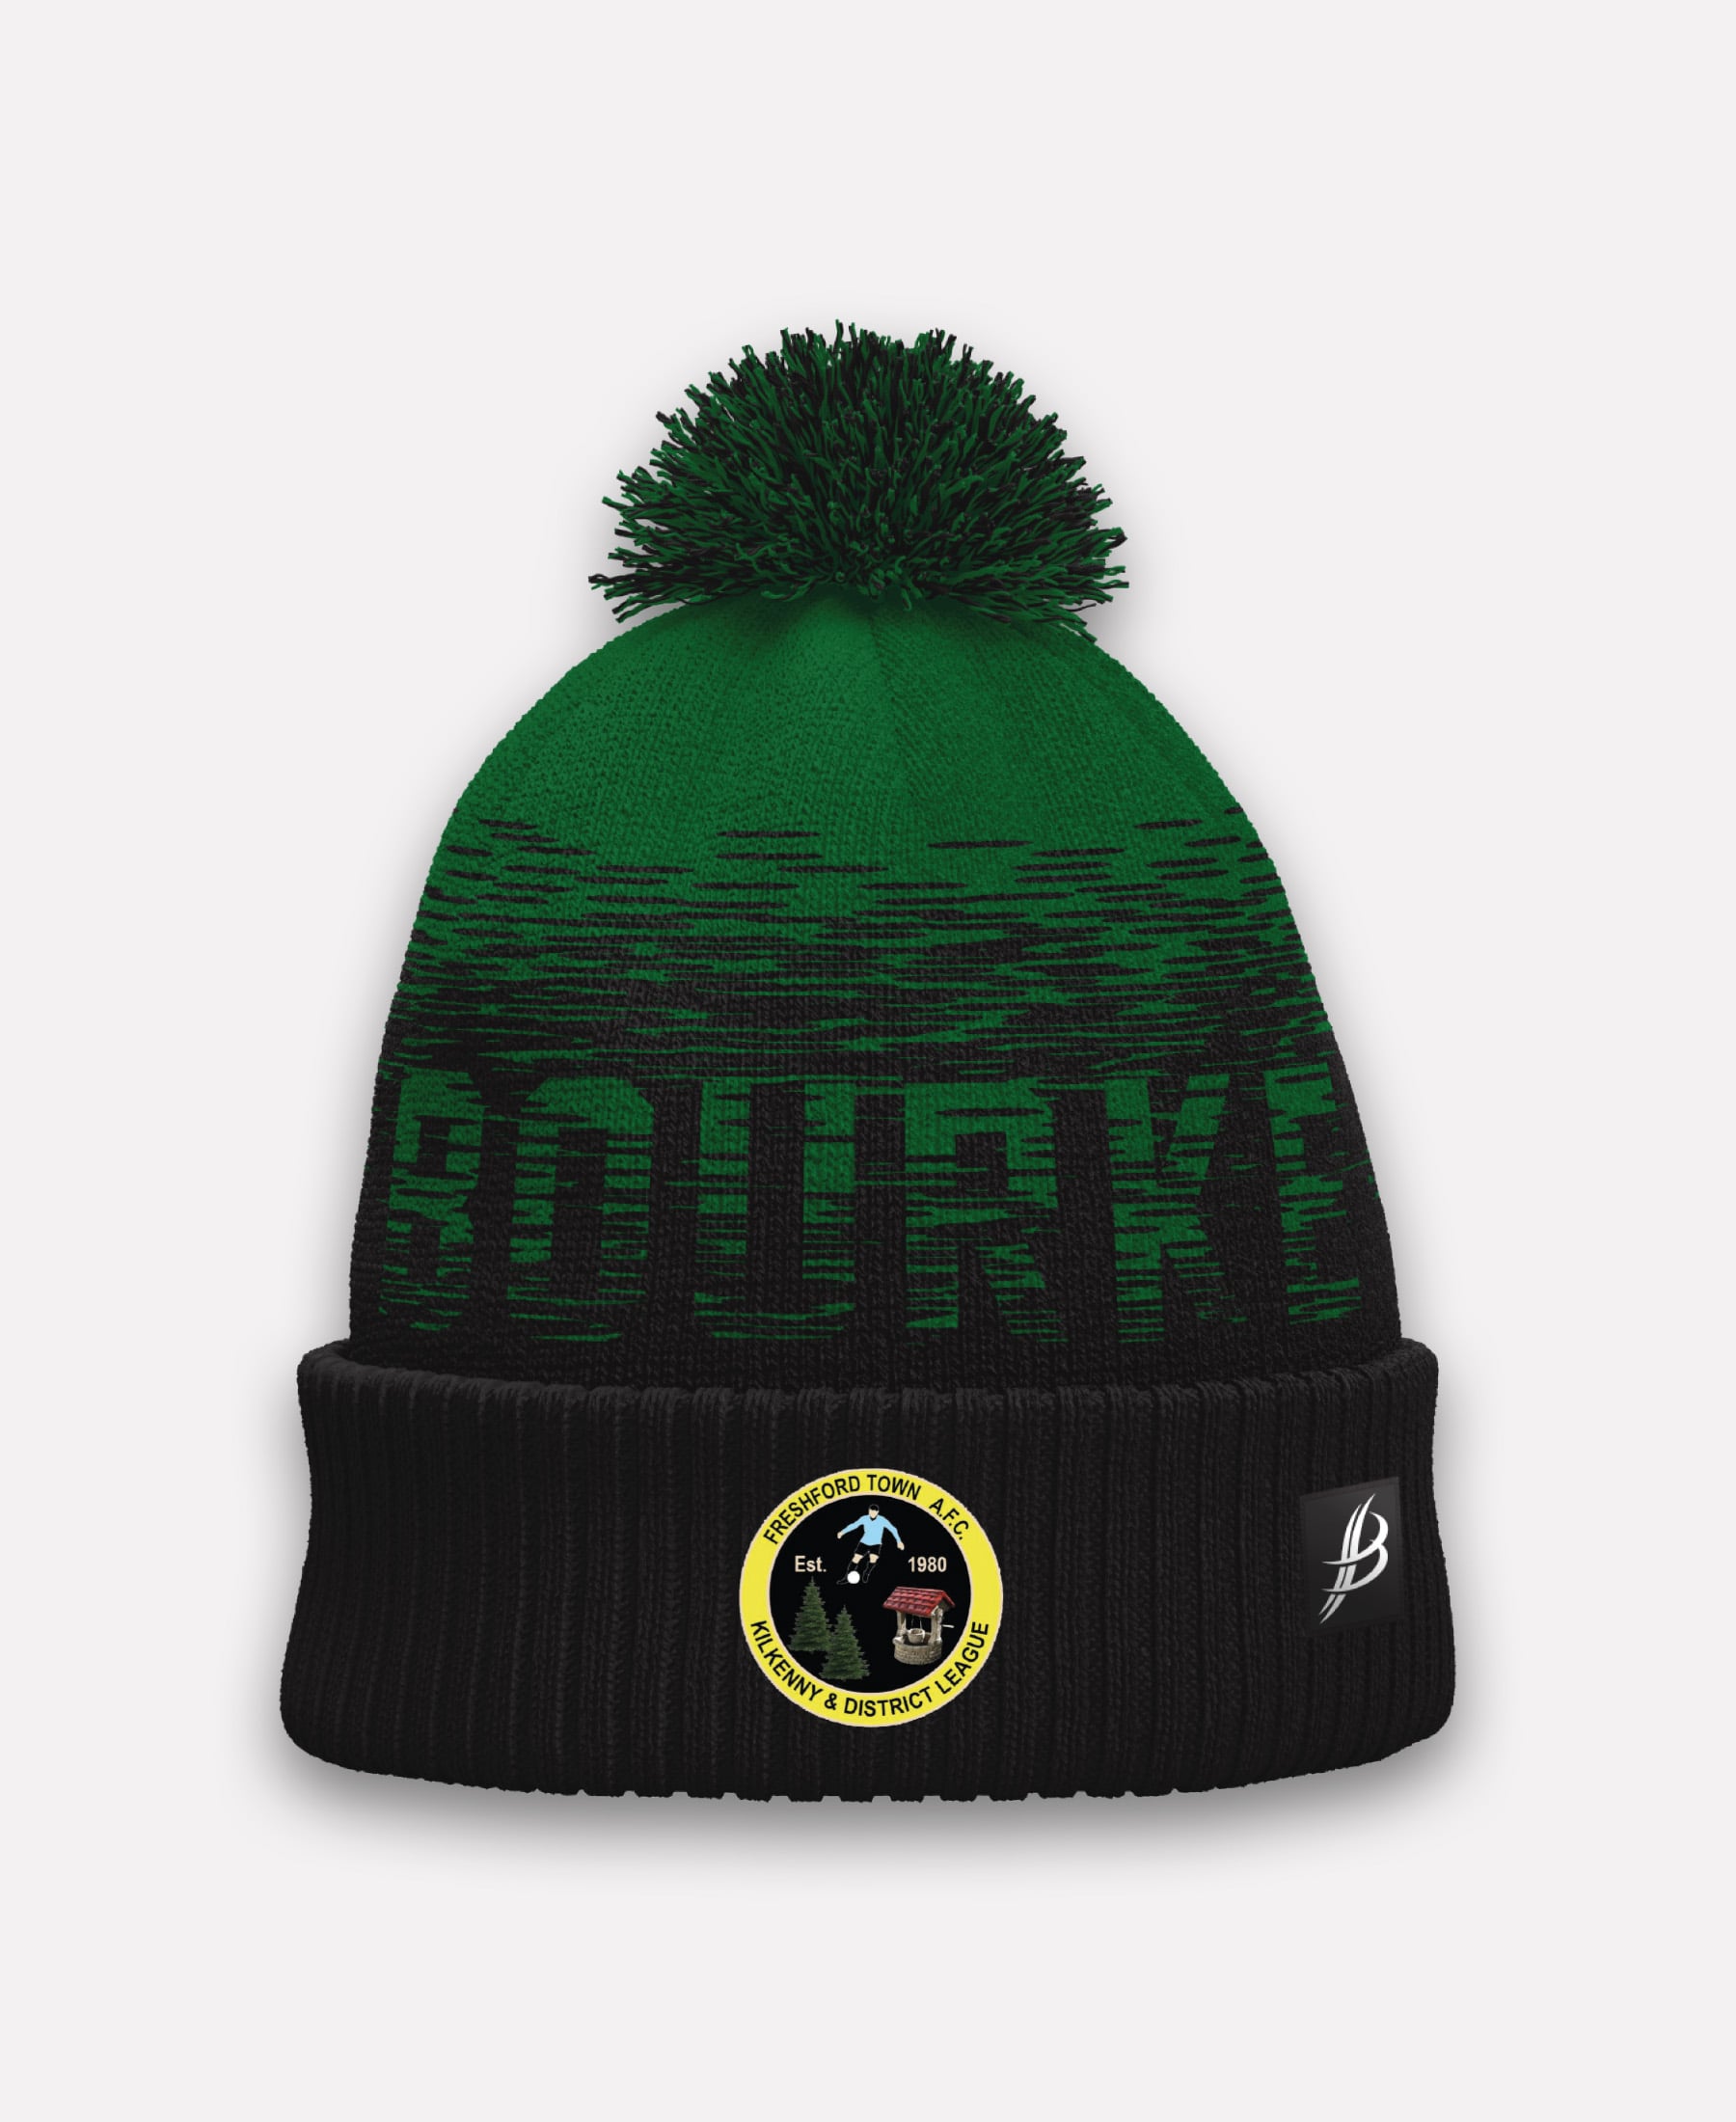 Freshford Town FC TACA Fleece Lined Bobble Hat (Green/Black)